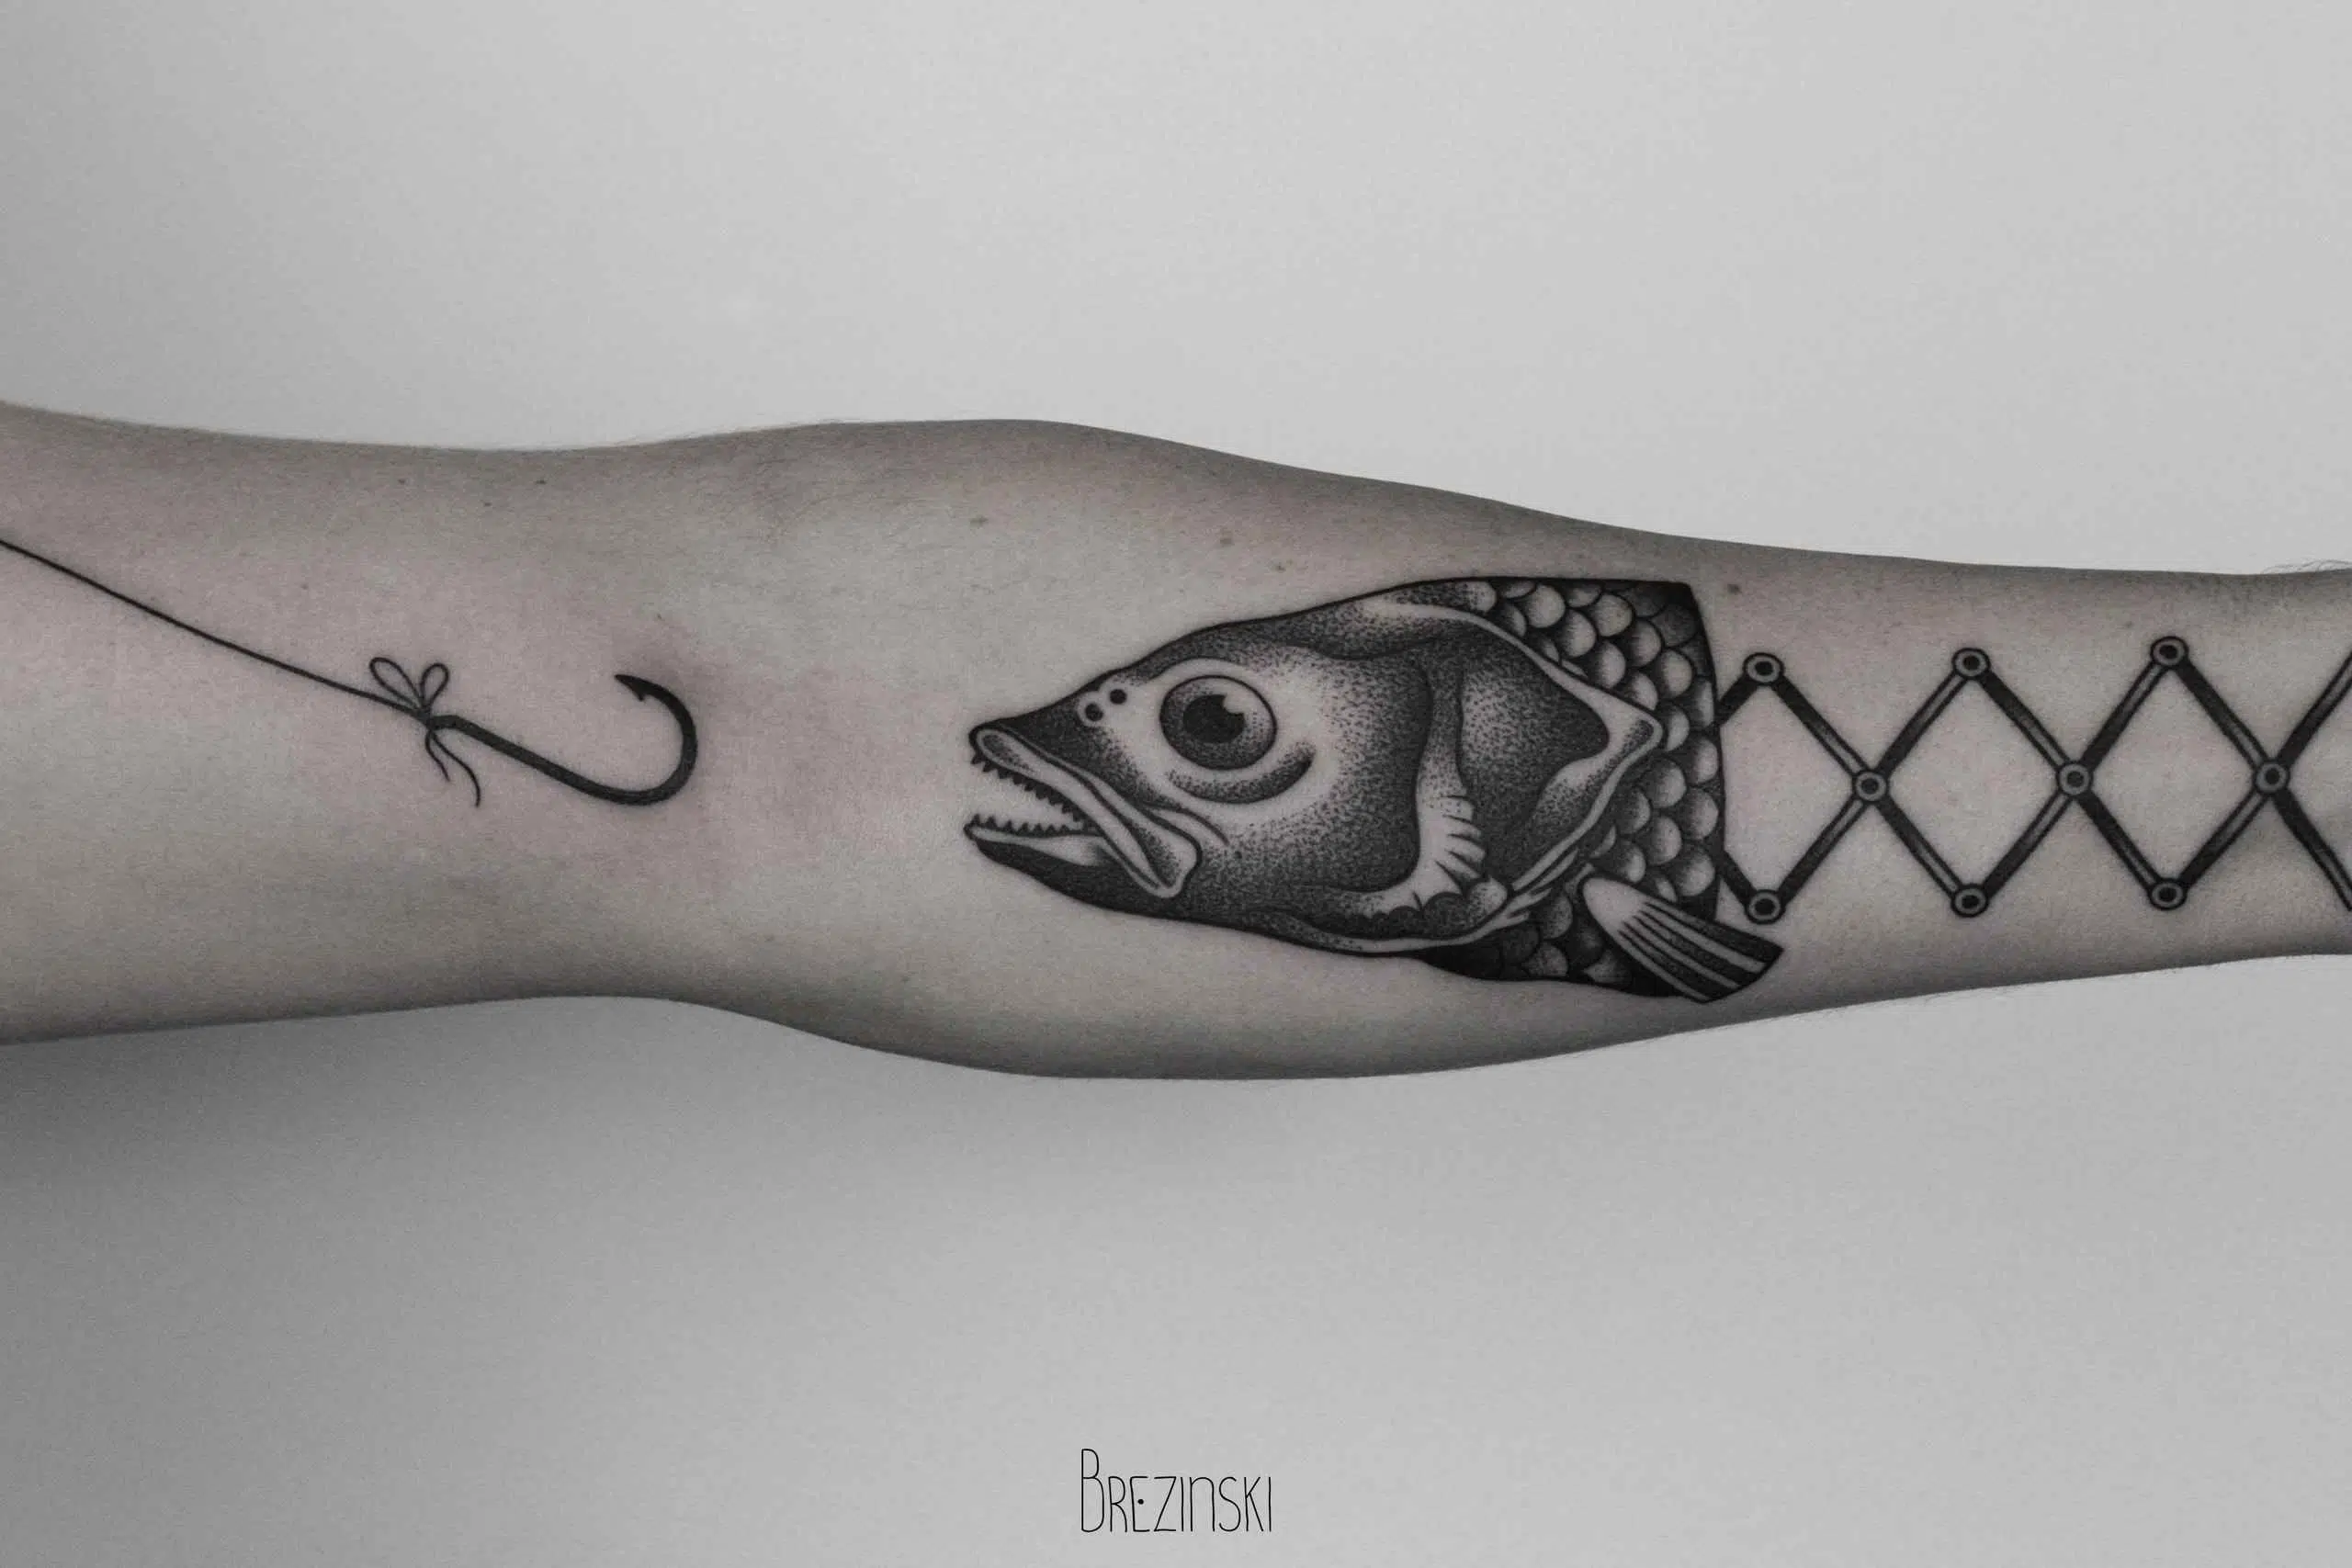 Ilya Brezinski tatuaje pez ansuelo